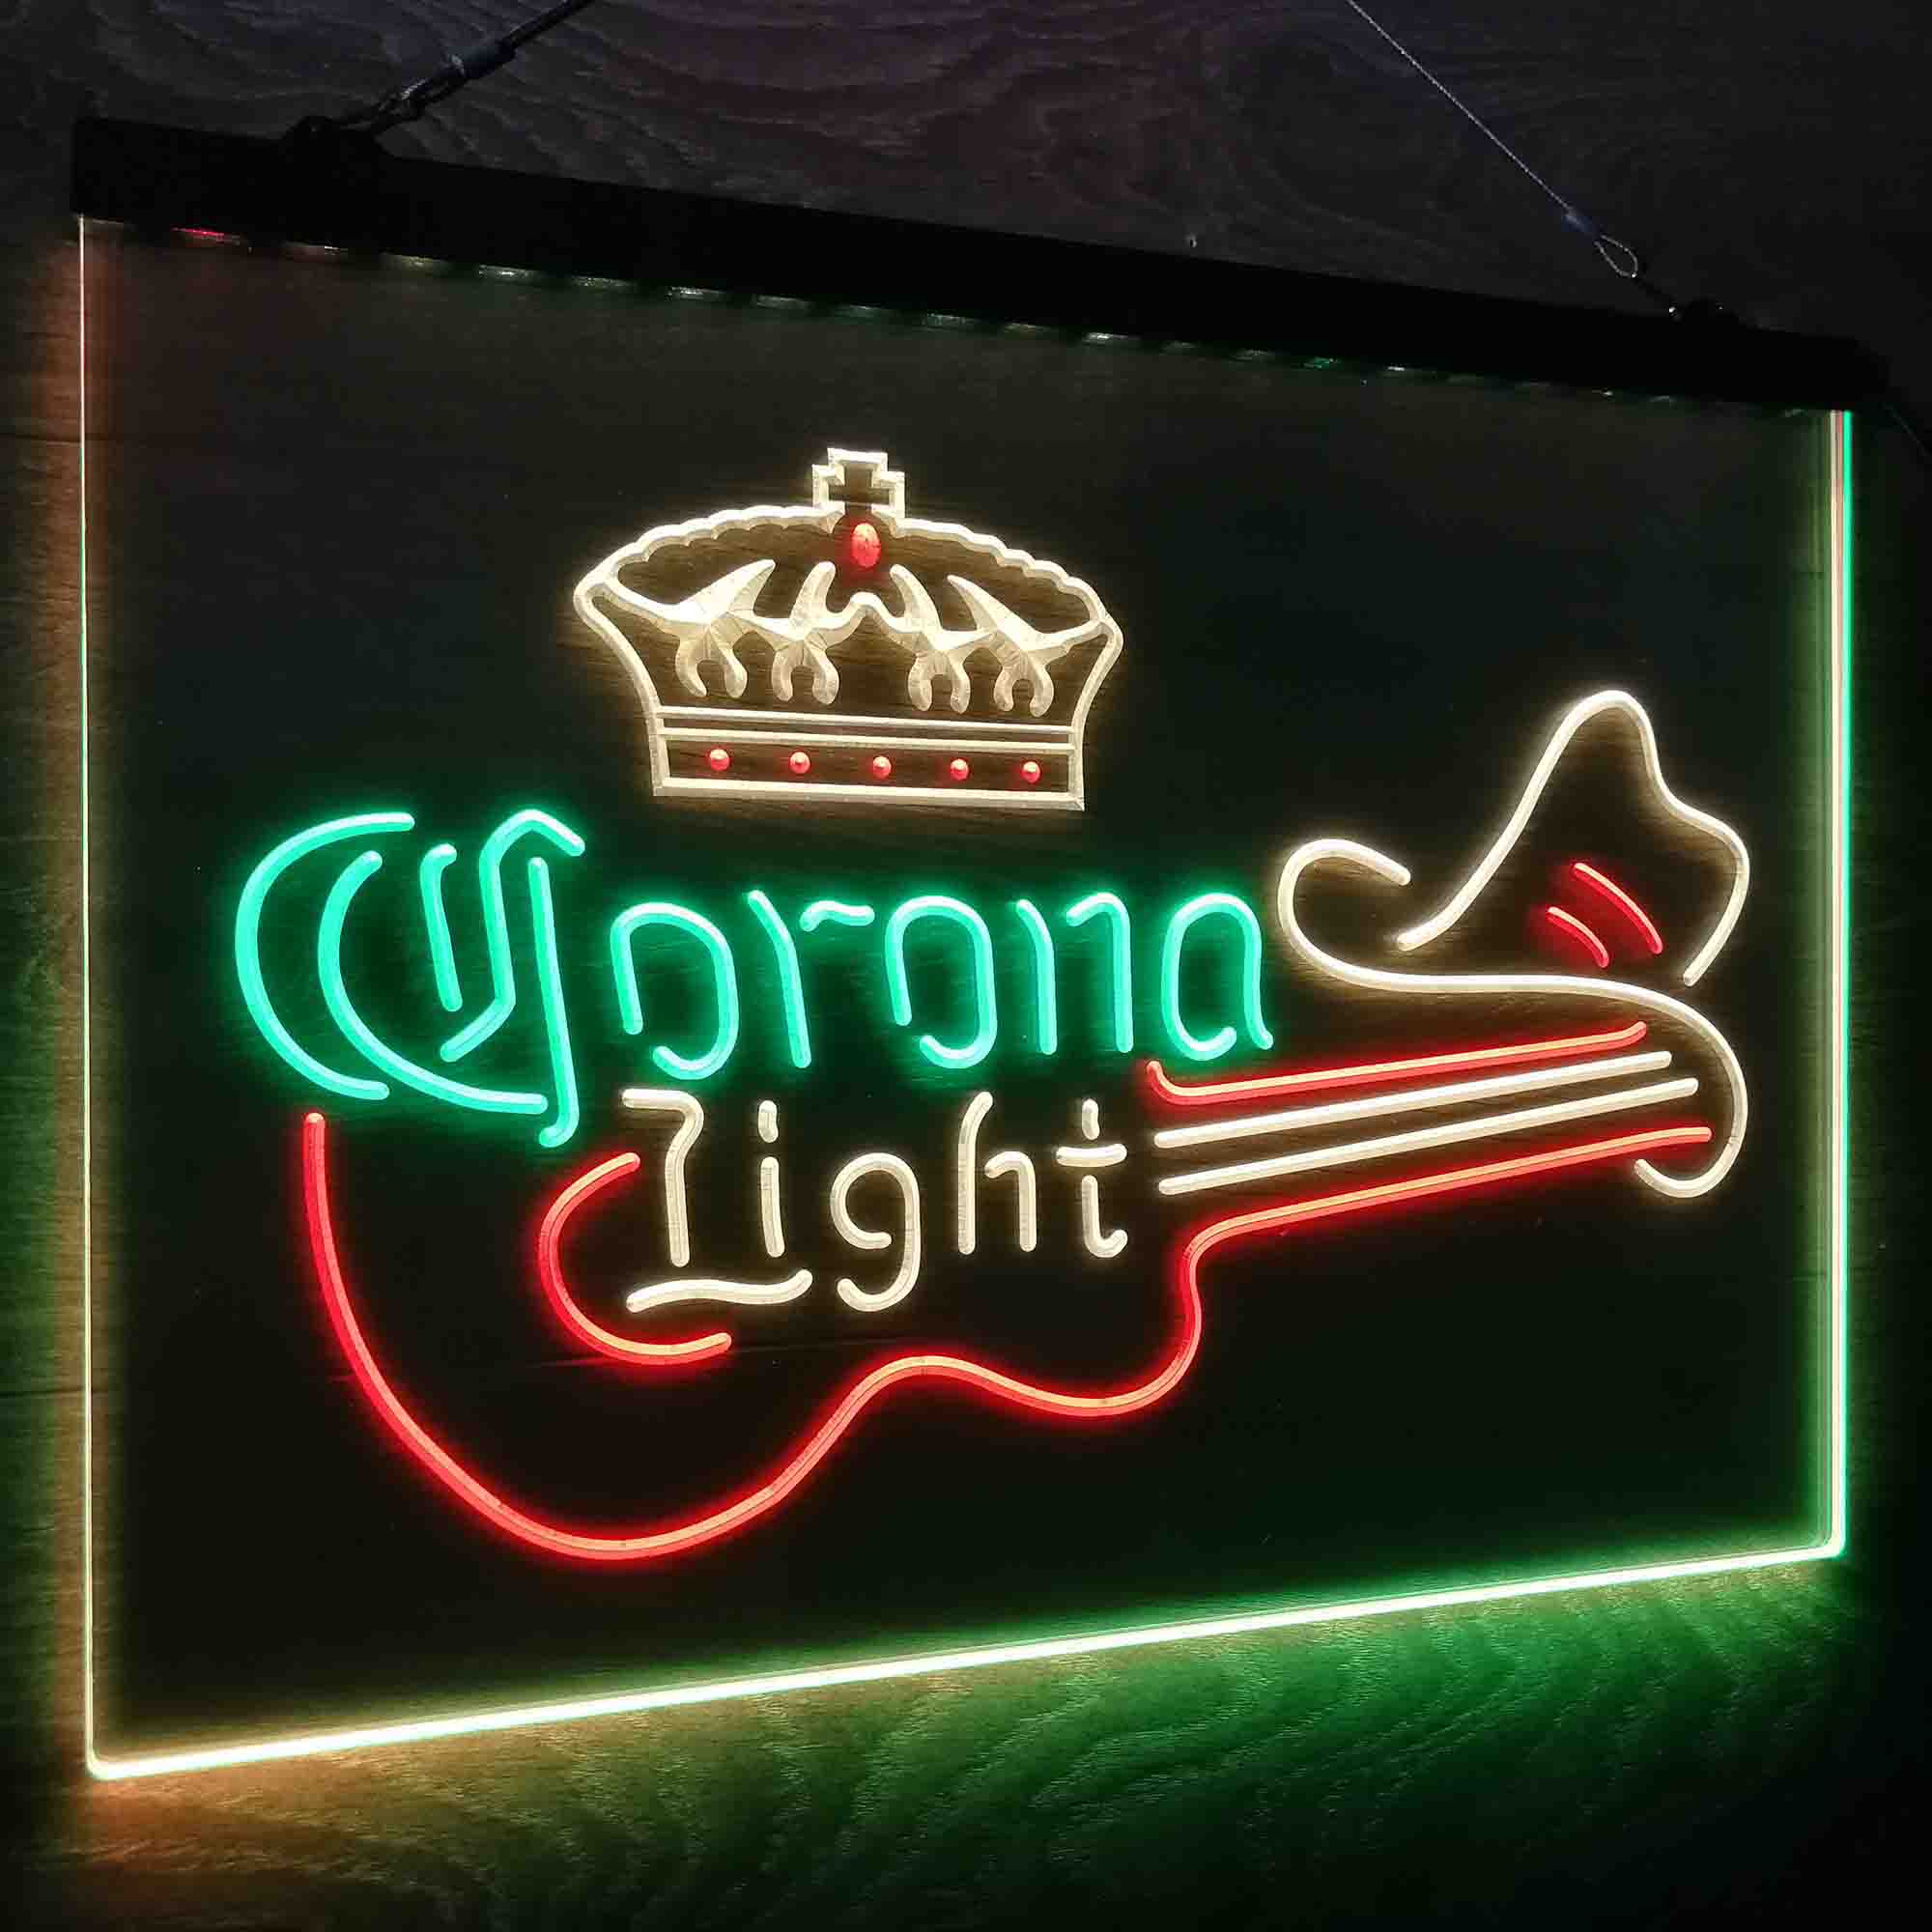 Coronas Light Guitar Cowboy Hat Neon LED Sign 3 Colors